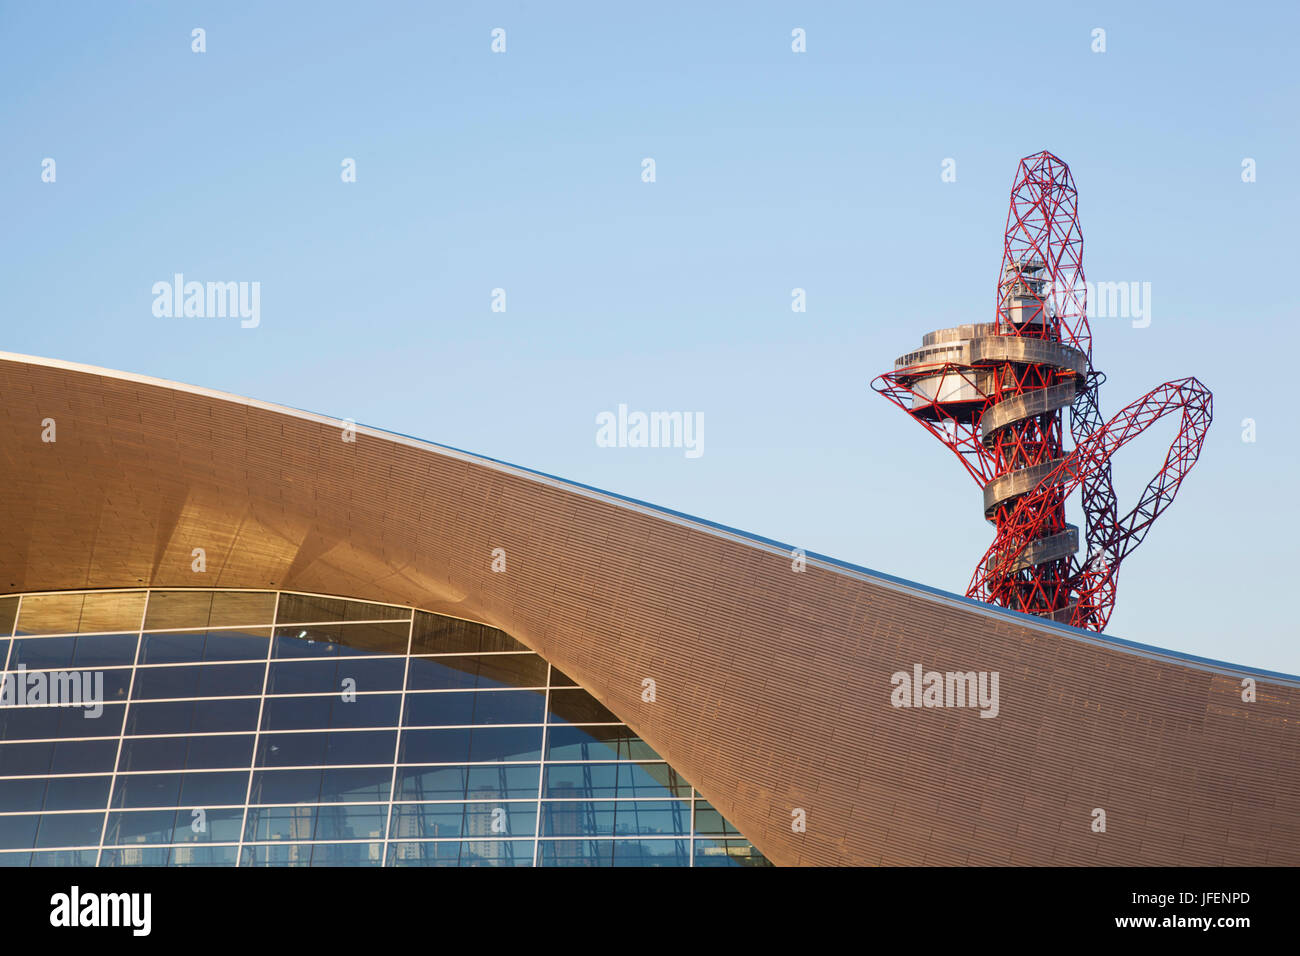 L'Angleterre, Londres, Stratford, Queen Elizabeth Olympic Park, ArcelorMittal Orbit Sculpture et le Centre Aquatique Banque D'Images